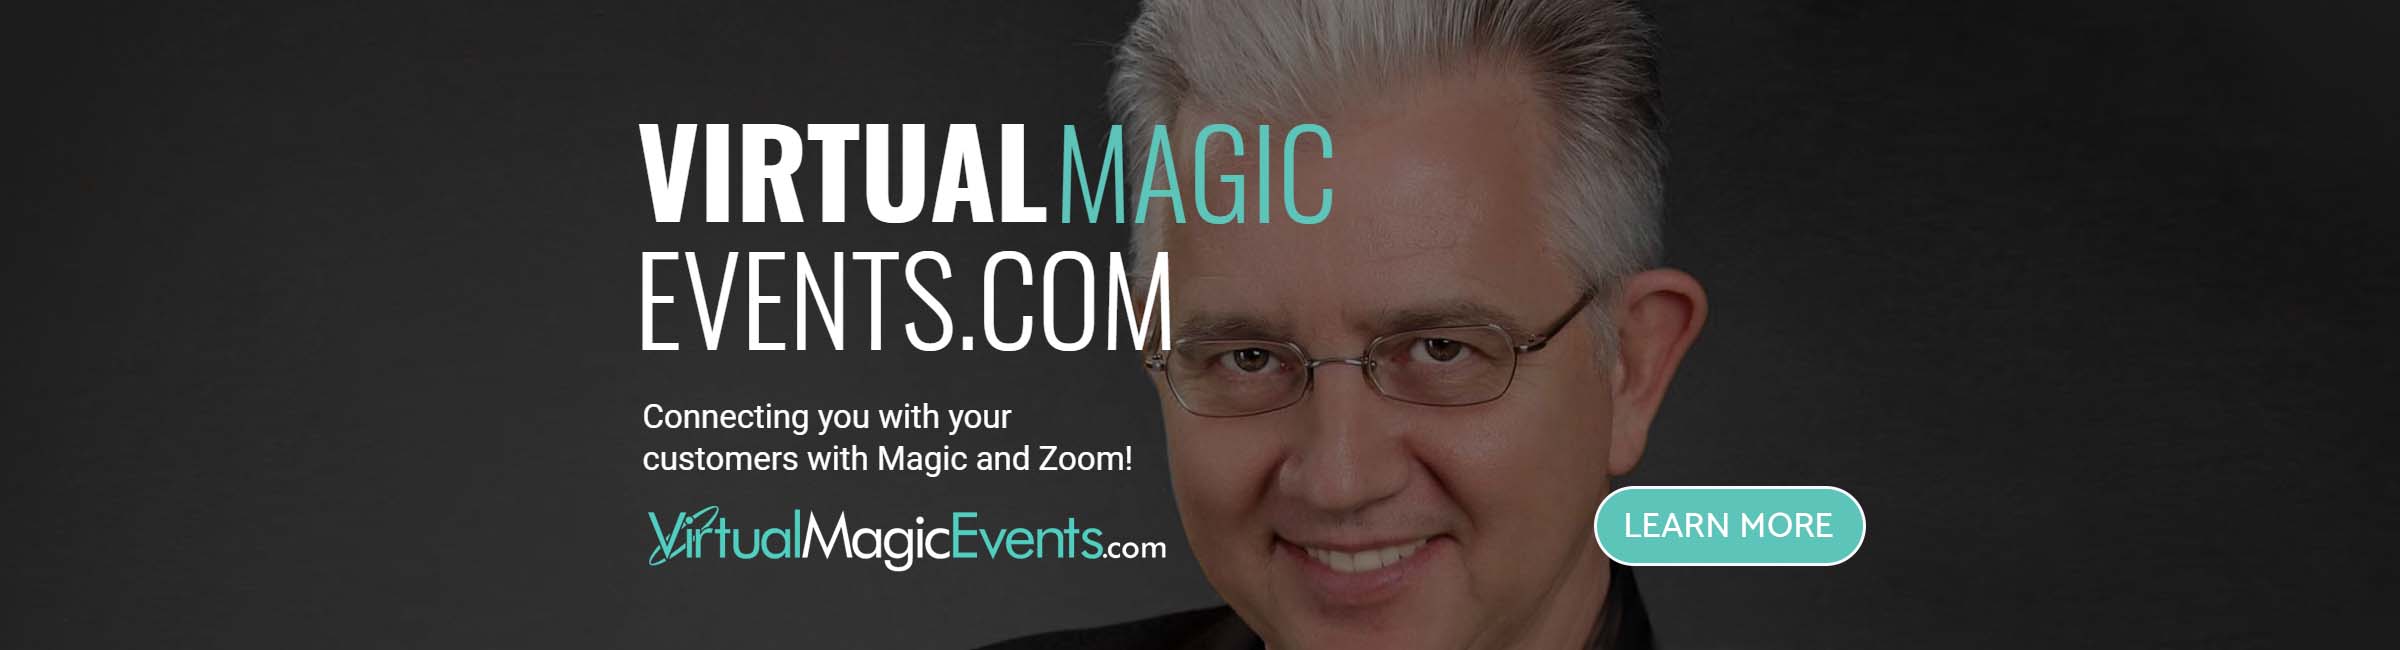 PaulGertner.com | The Paul Gertner Group | Corporate Marketing Through Magic